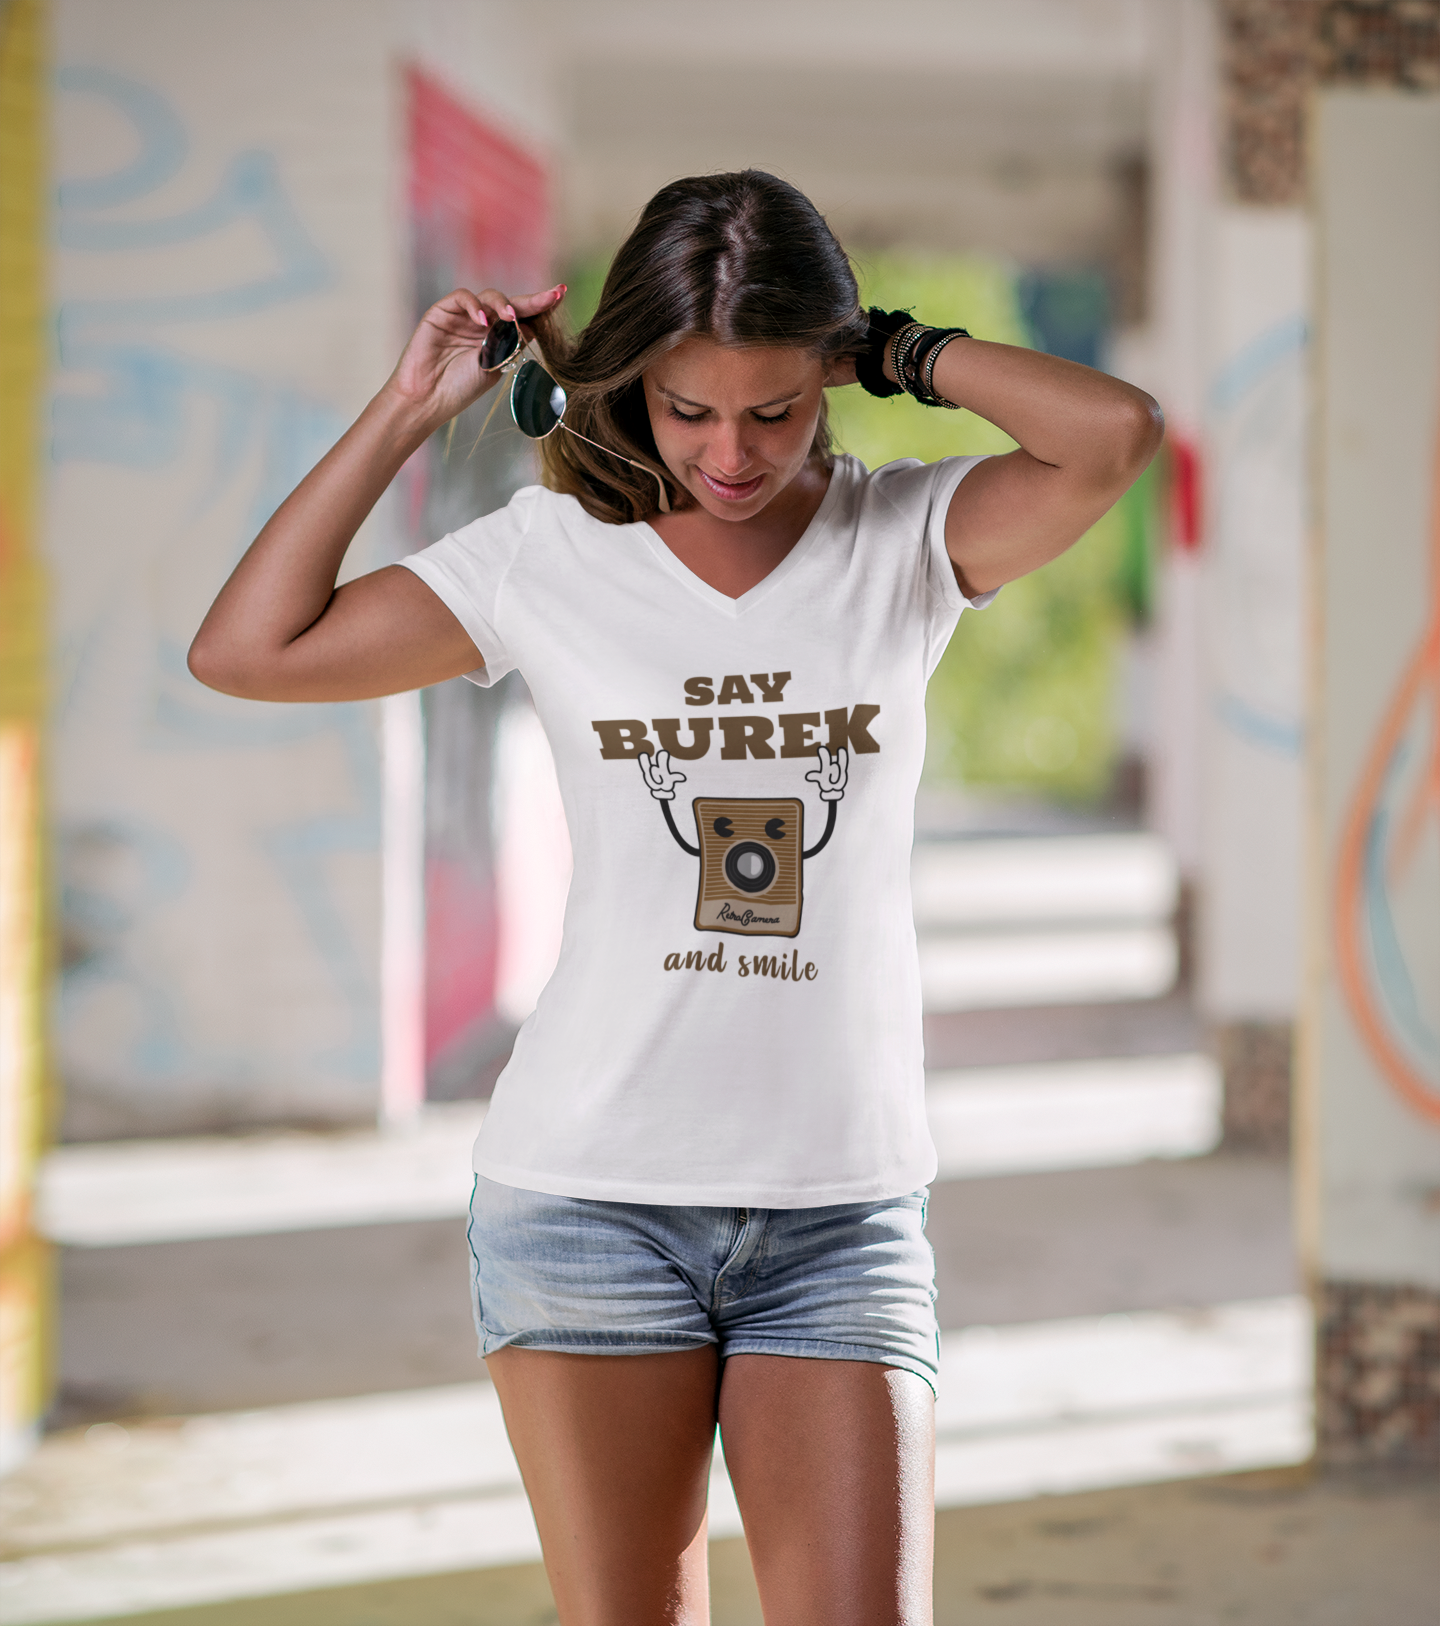 "Say Burek and smile" - T-Shirt mit V-Ausschnitt